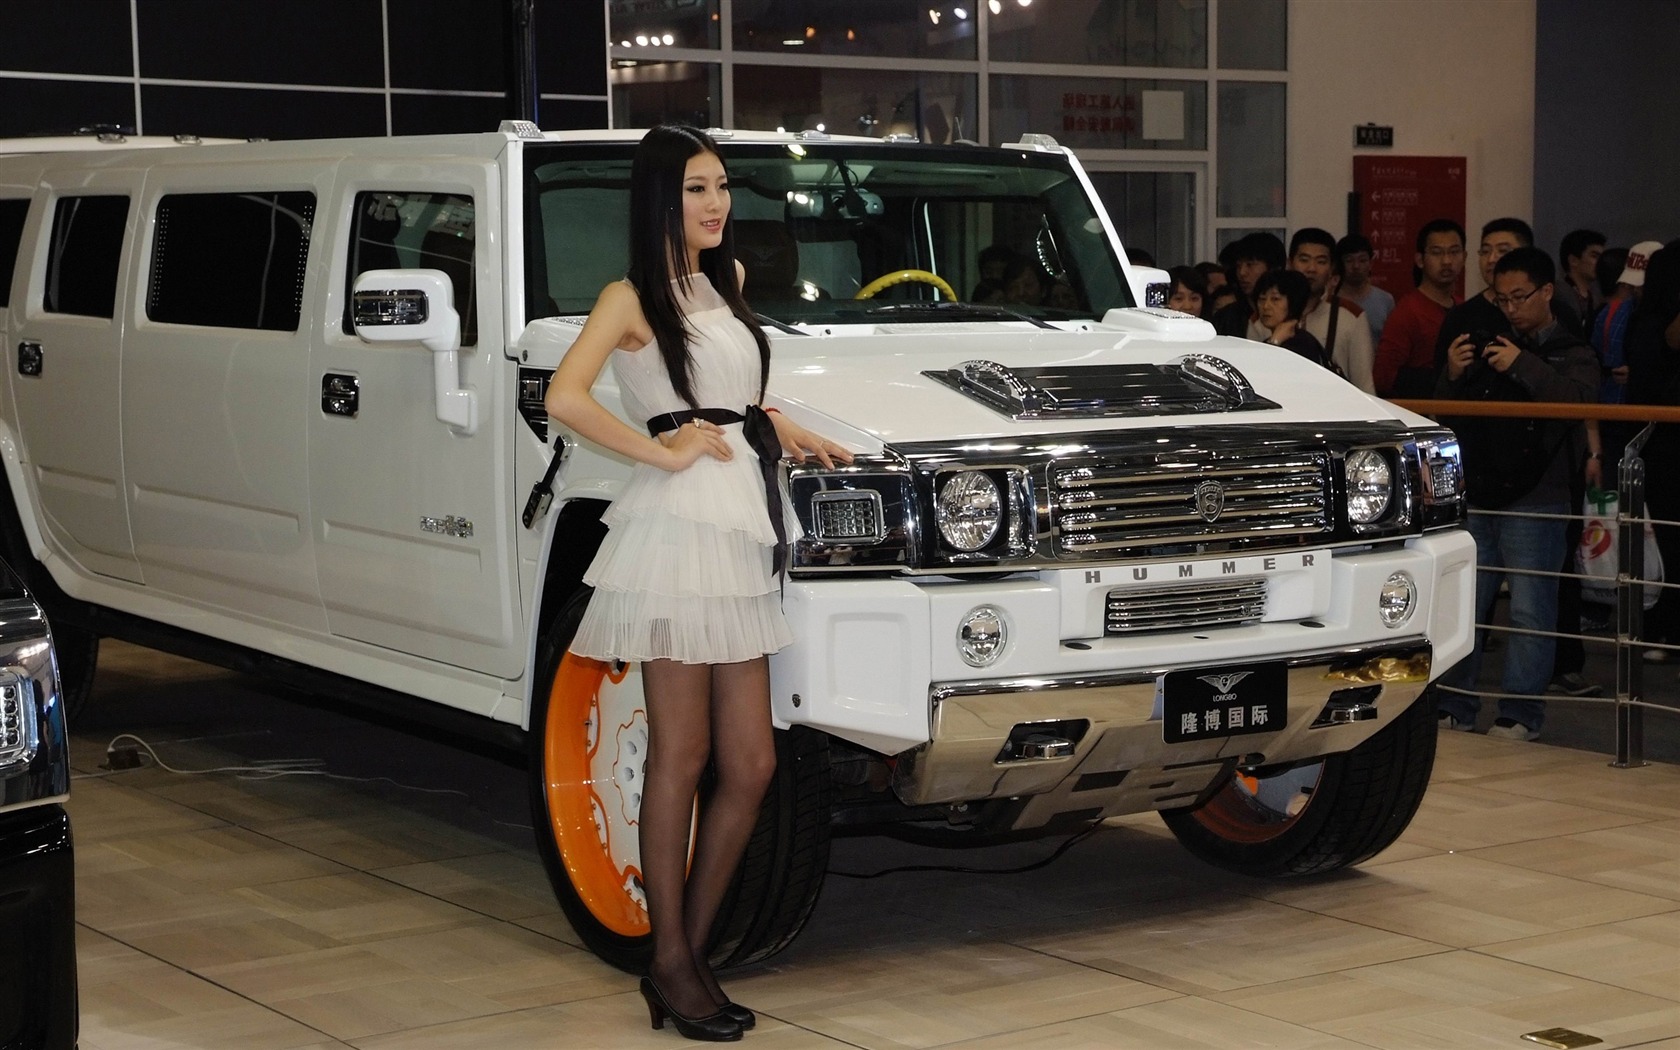 2010 Salón Internacional del Automóvil de Beijing Heung Che belleza (obras barras de refuerzo) #6 - 1680x1050